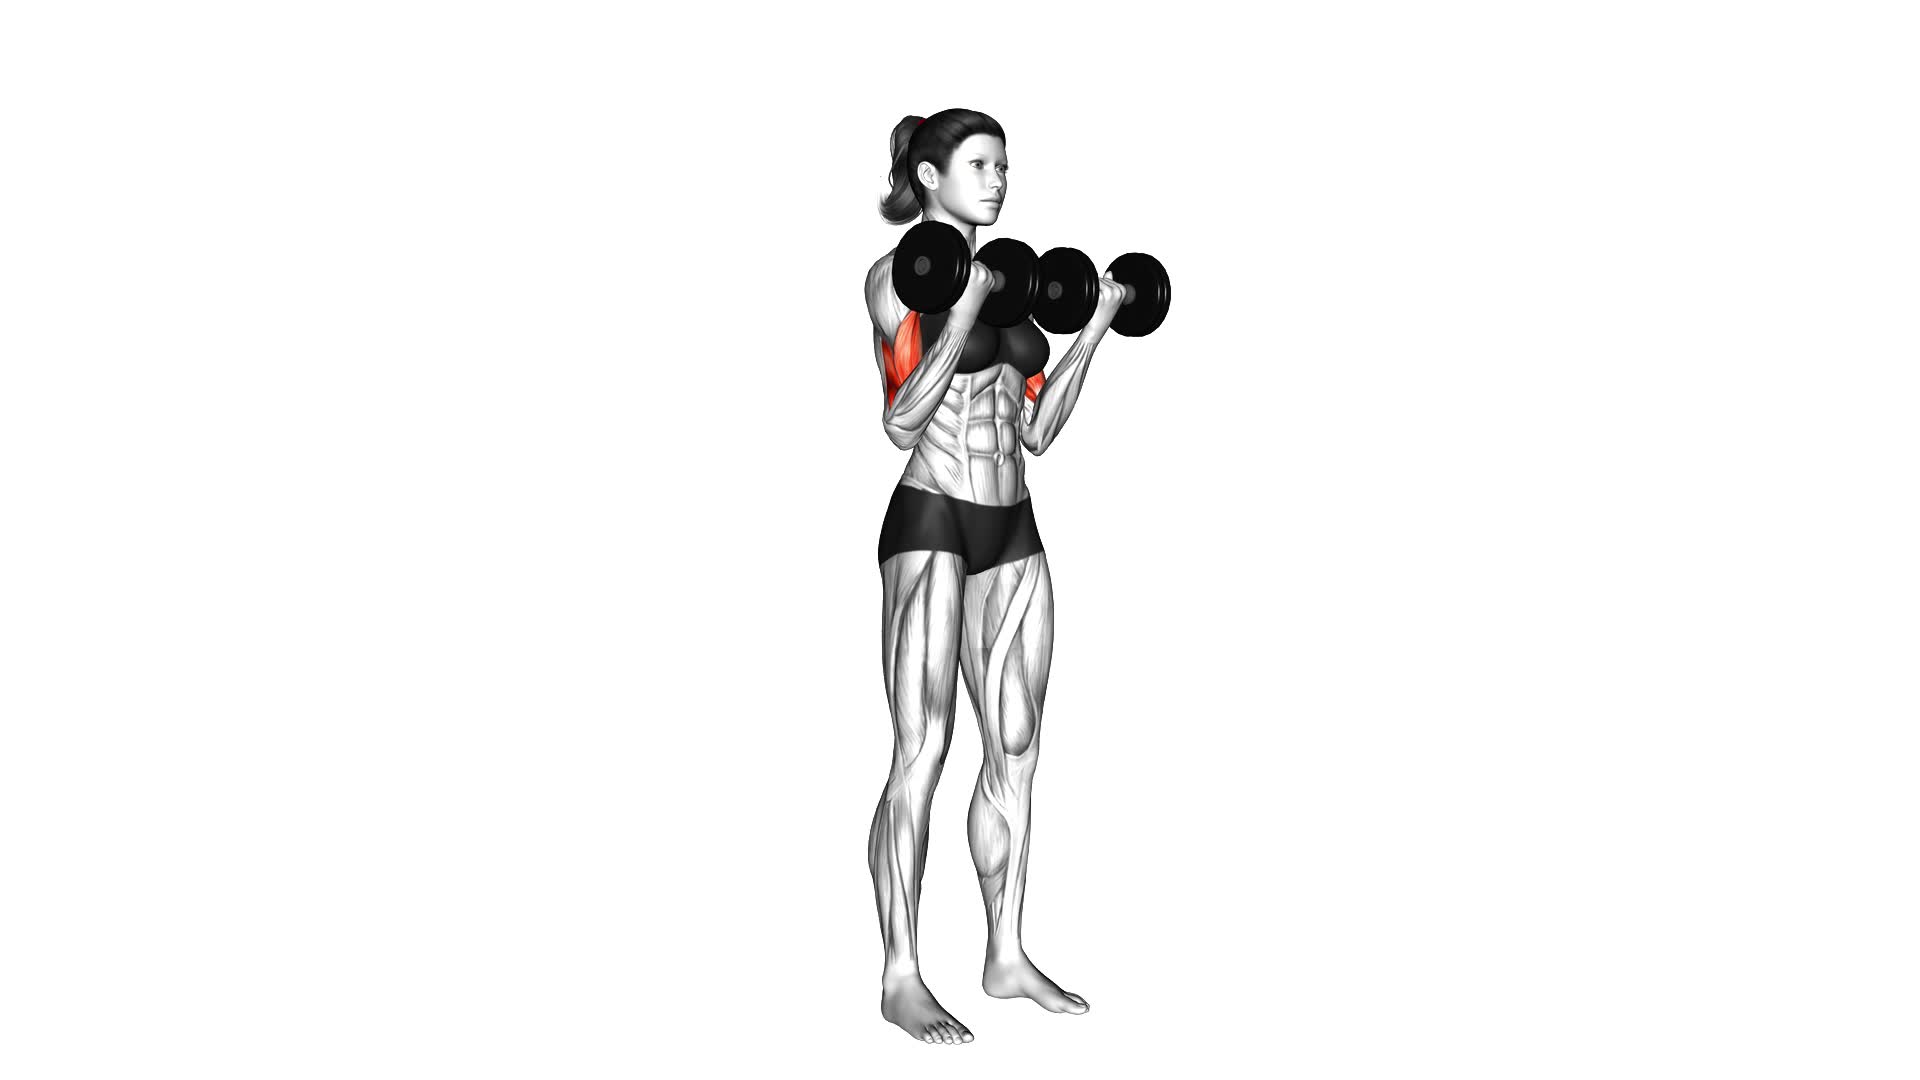 Dumbbell Biceps Curl (female) - Video Exercise Guide & Tips